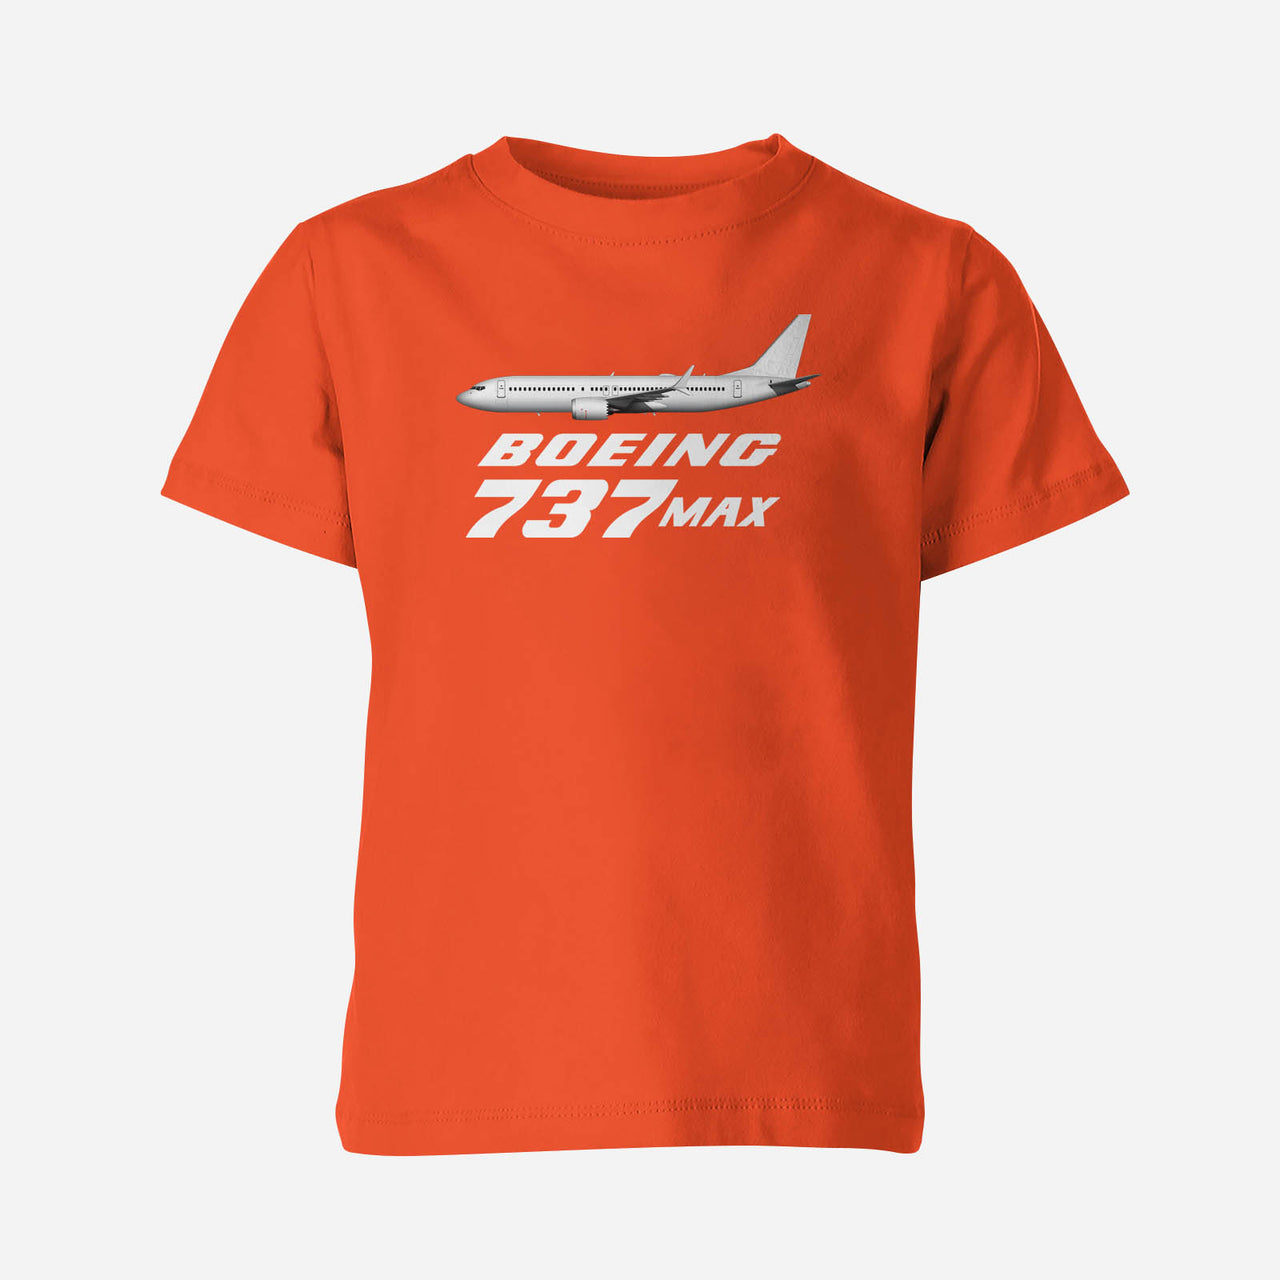 The Boeing 737Max Designed Children T-Shirts